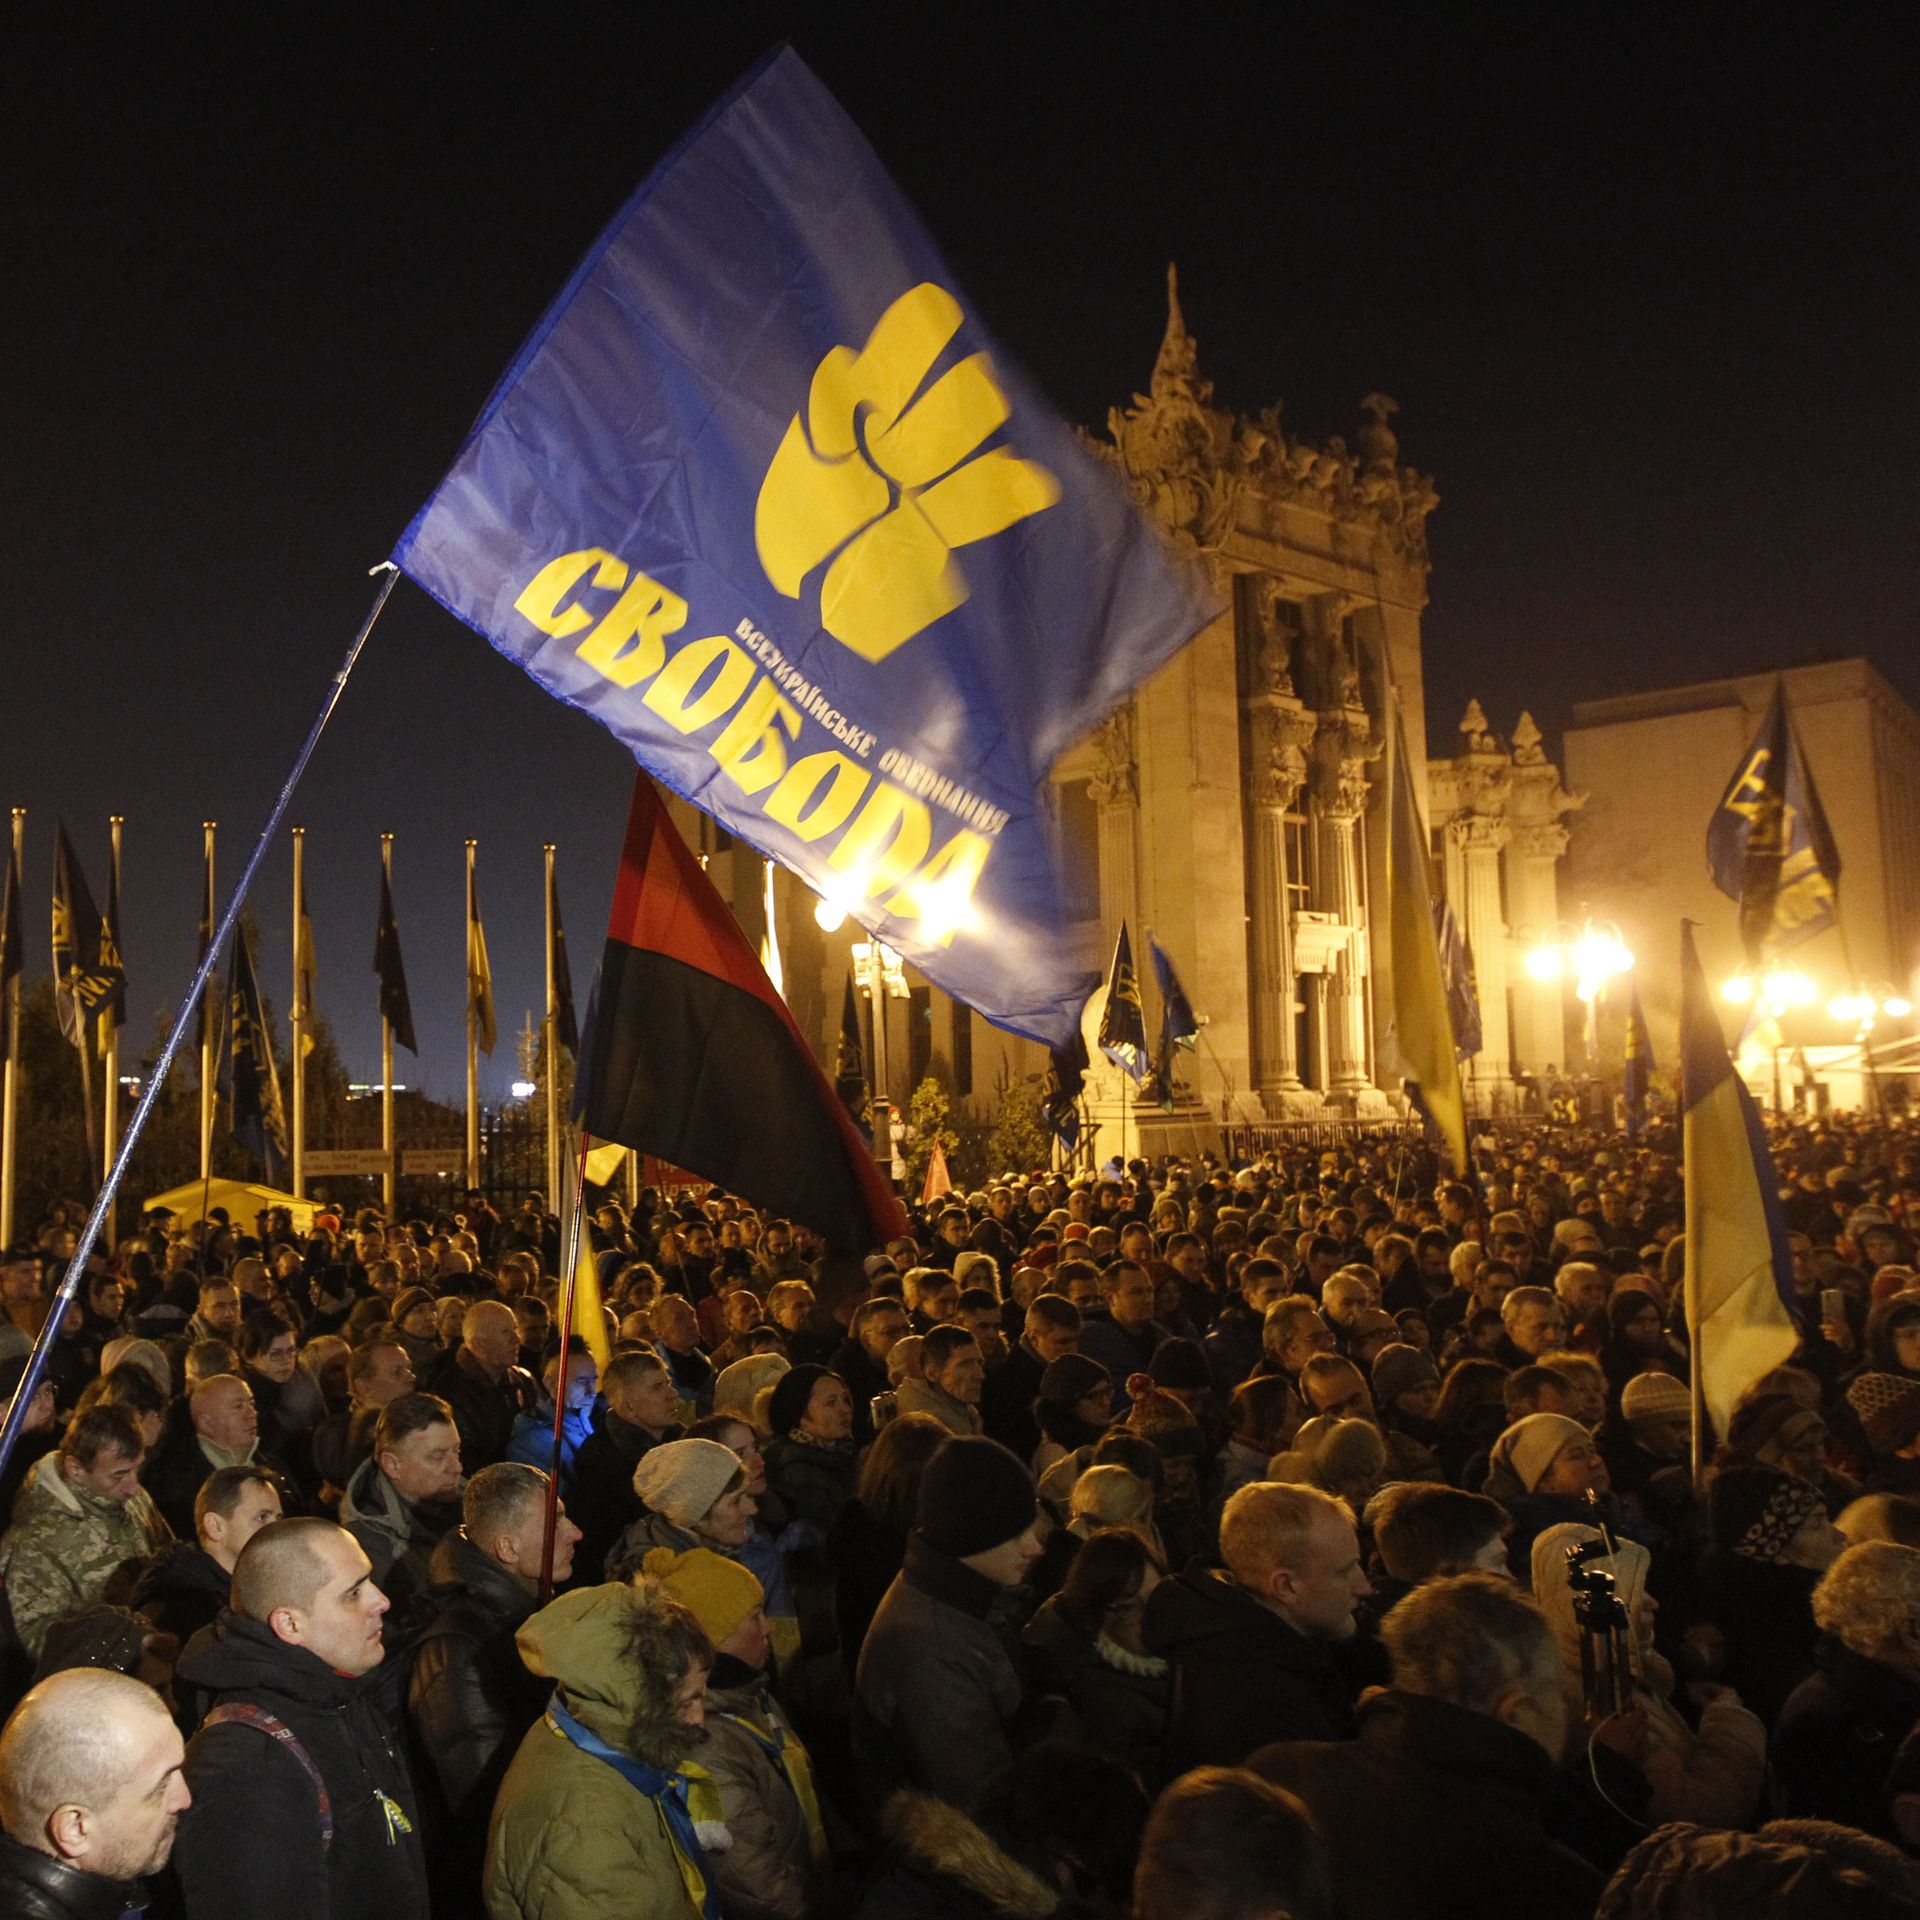 protestors at night in a public square in Kiev